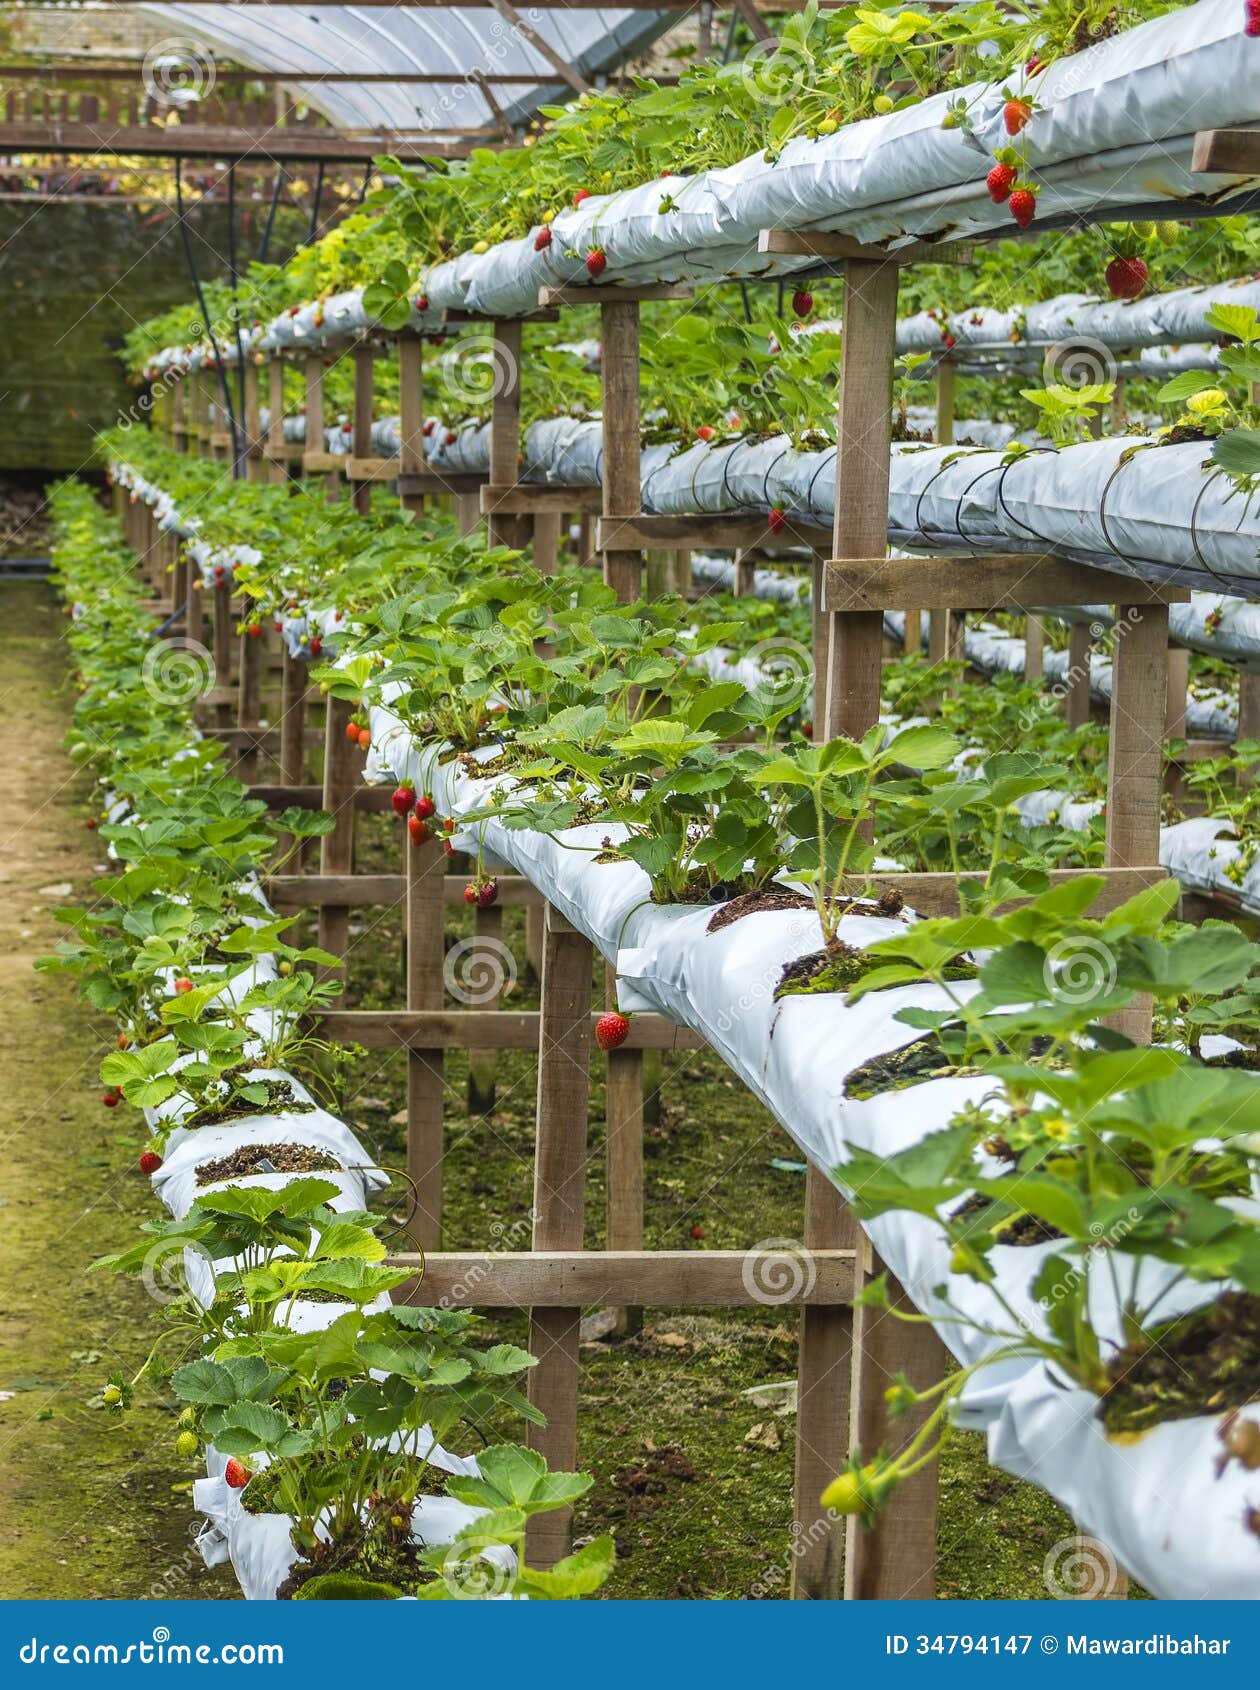 hydroponic strawberry business plan